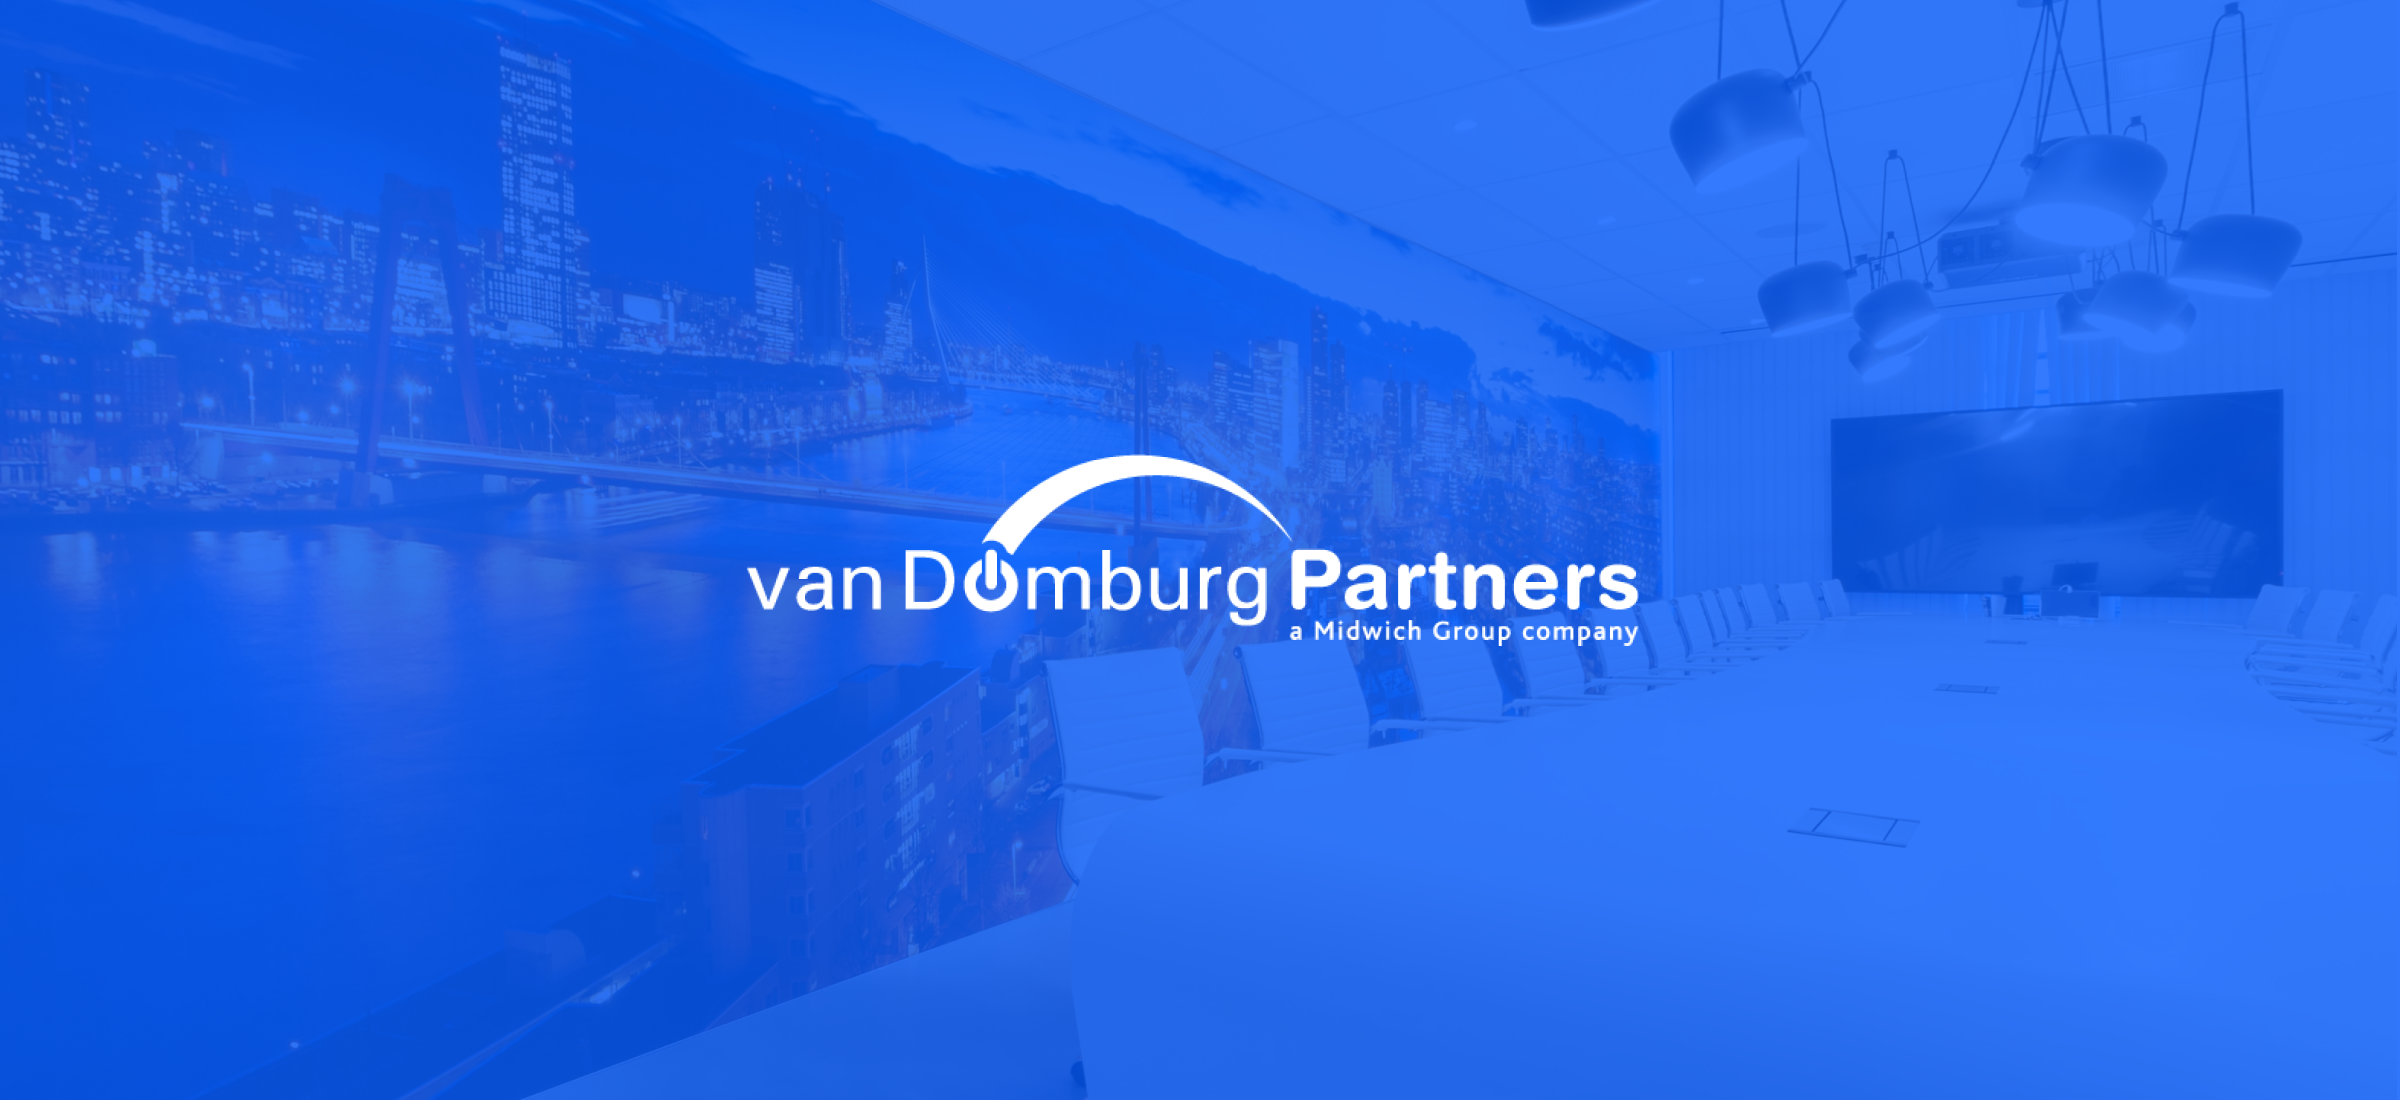 Airtame announces partnership with Van Domburg Partners BV